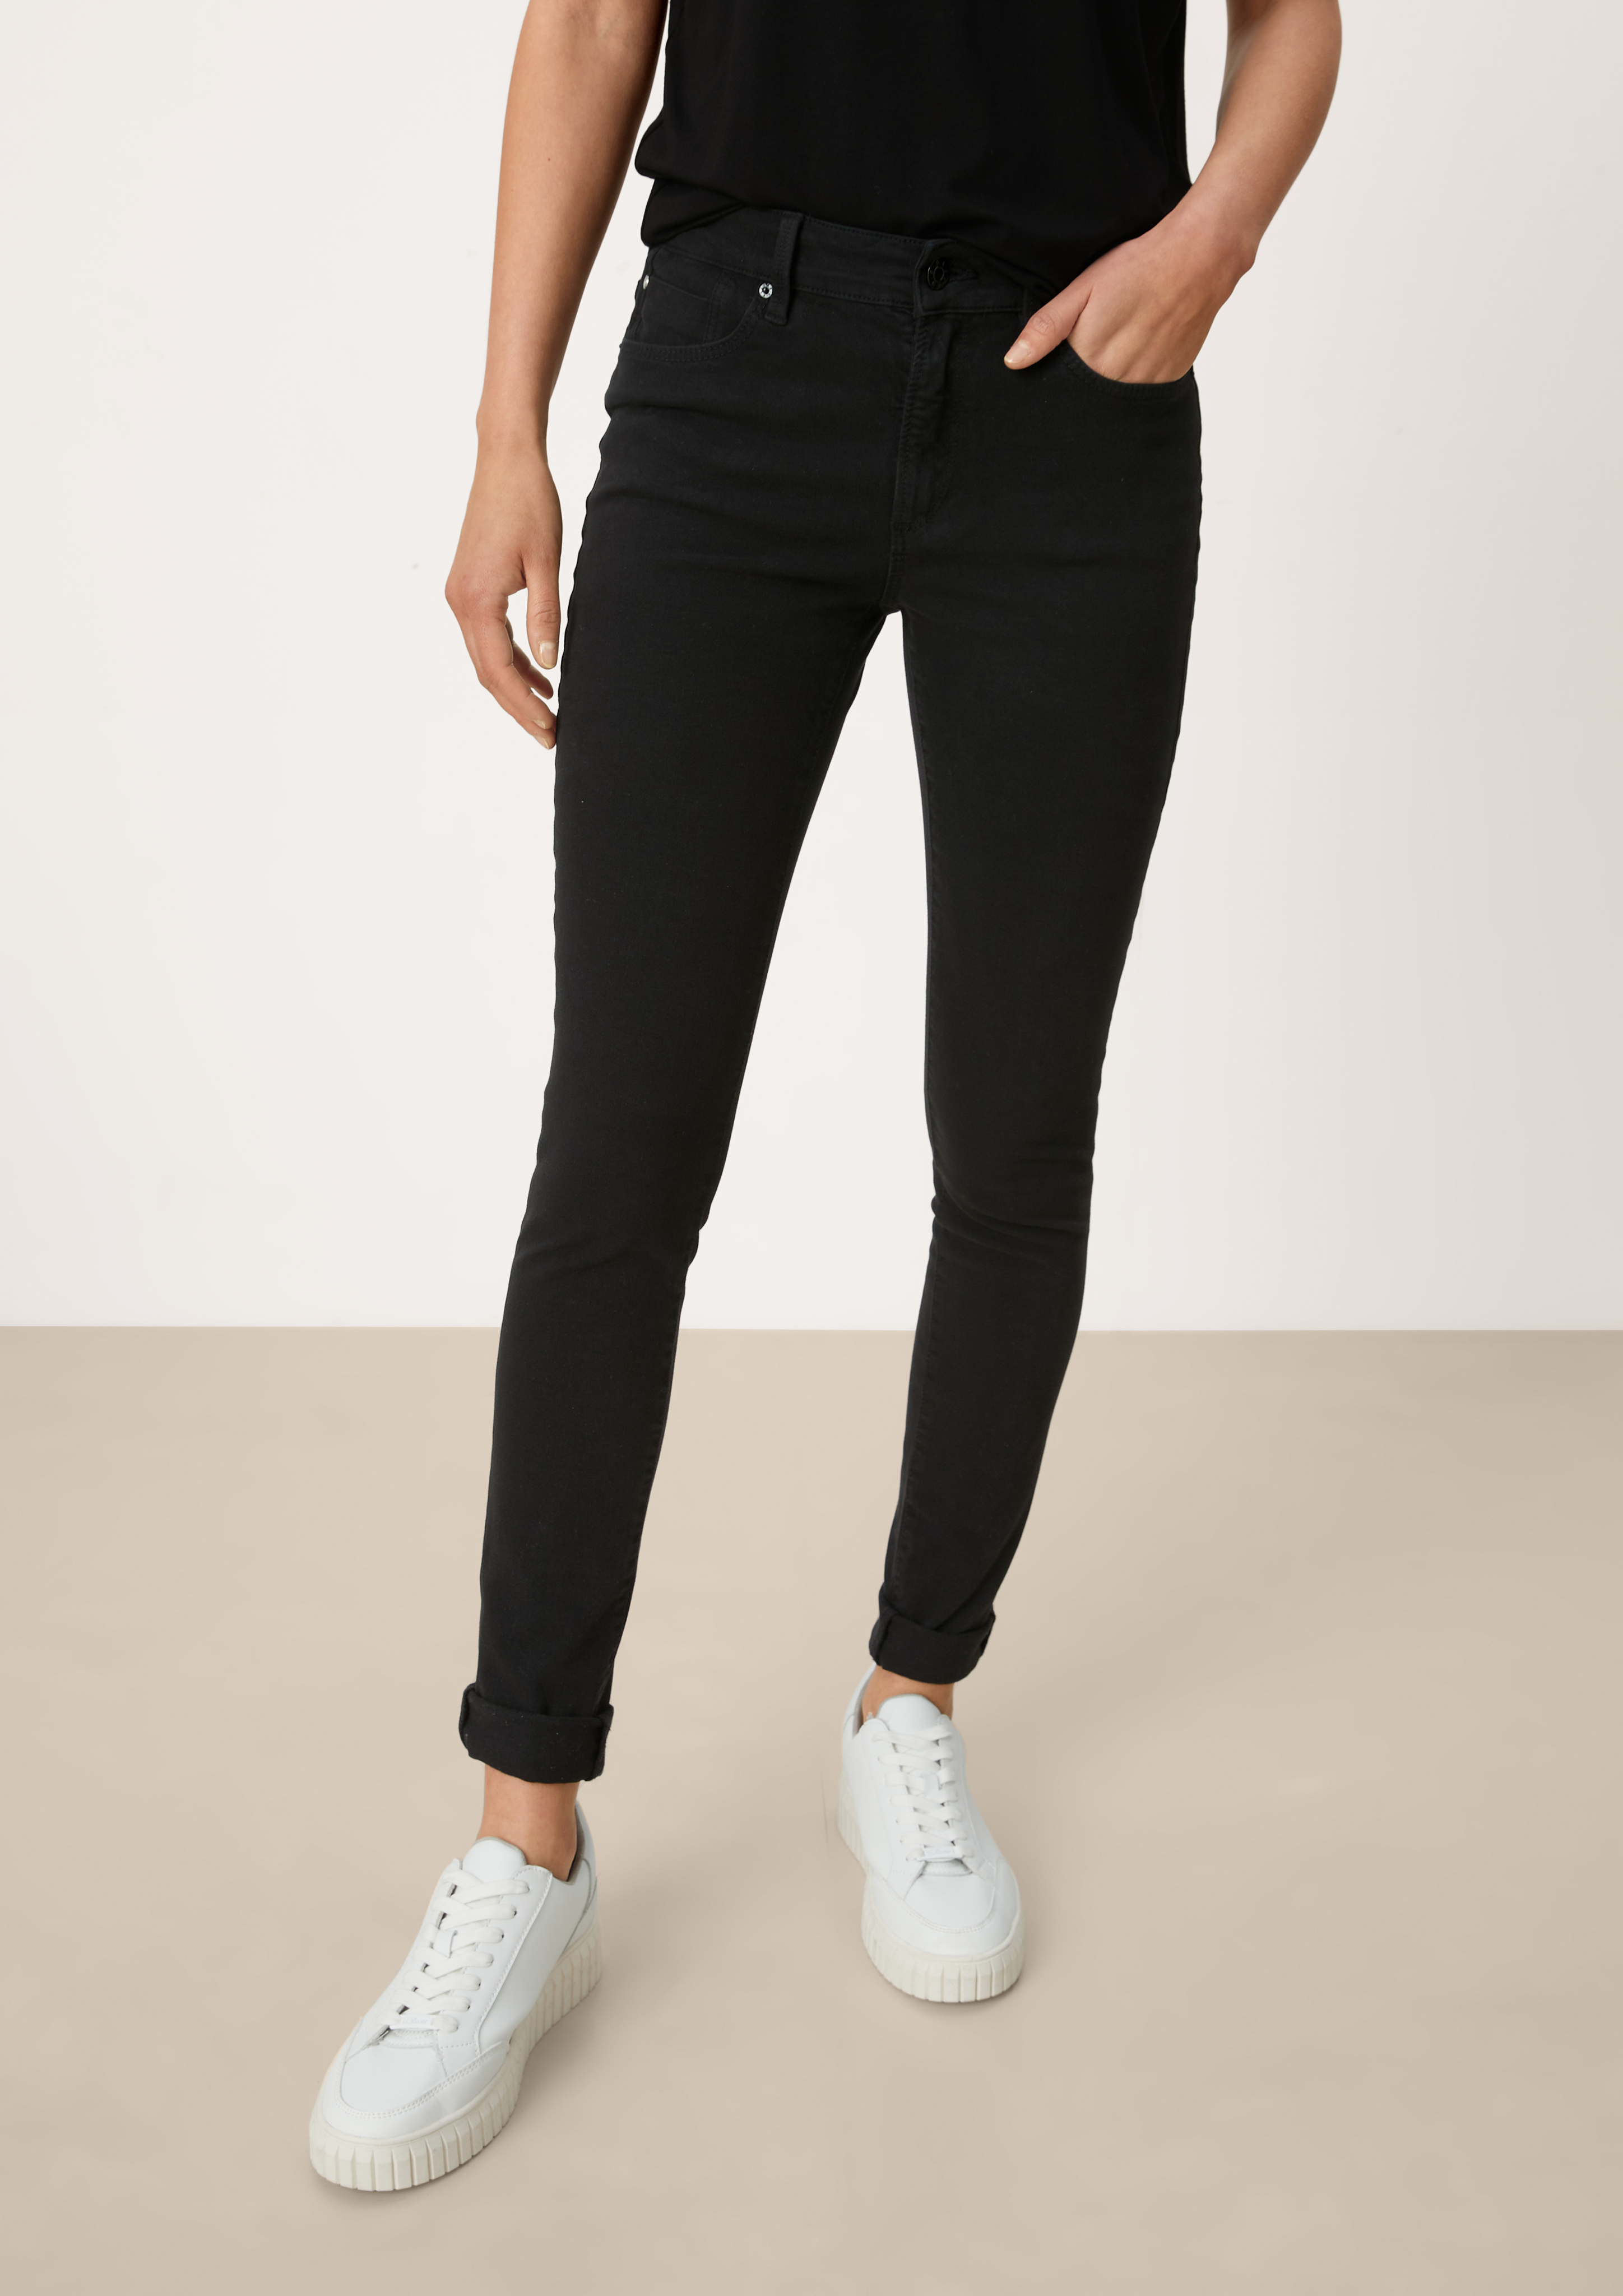 Izabell jeans / leg mid skinny - / skinny fit / black rise